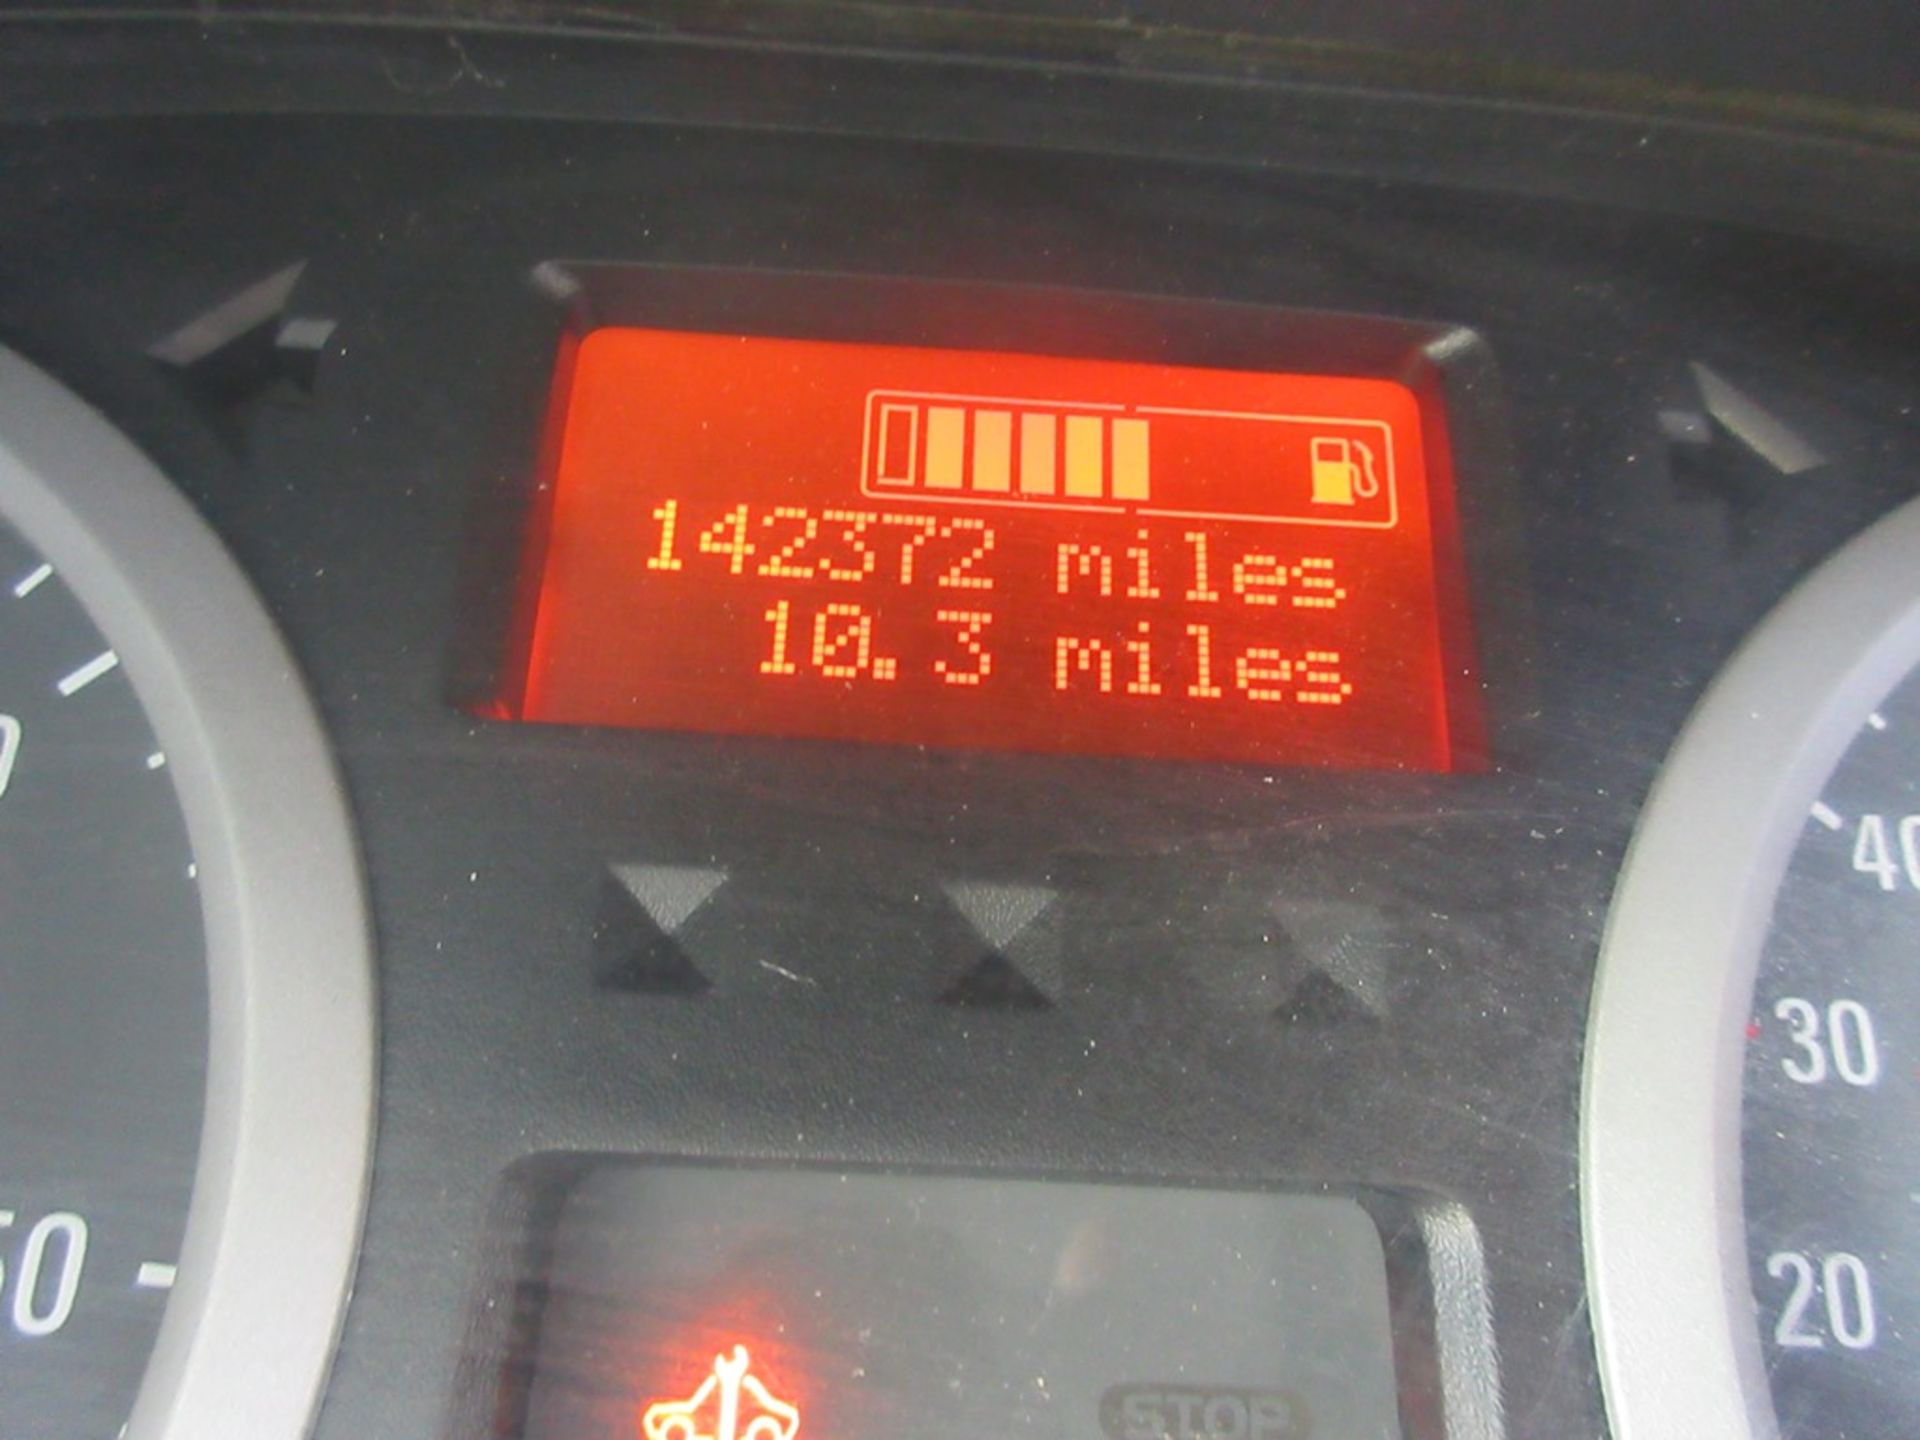 Vauxhall Vivaro 2900 L2H1 2.0Cdti LWB panel van, 114bhp Registration: CE11 HDF Recorded mileage - Image 11 of 13